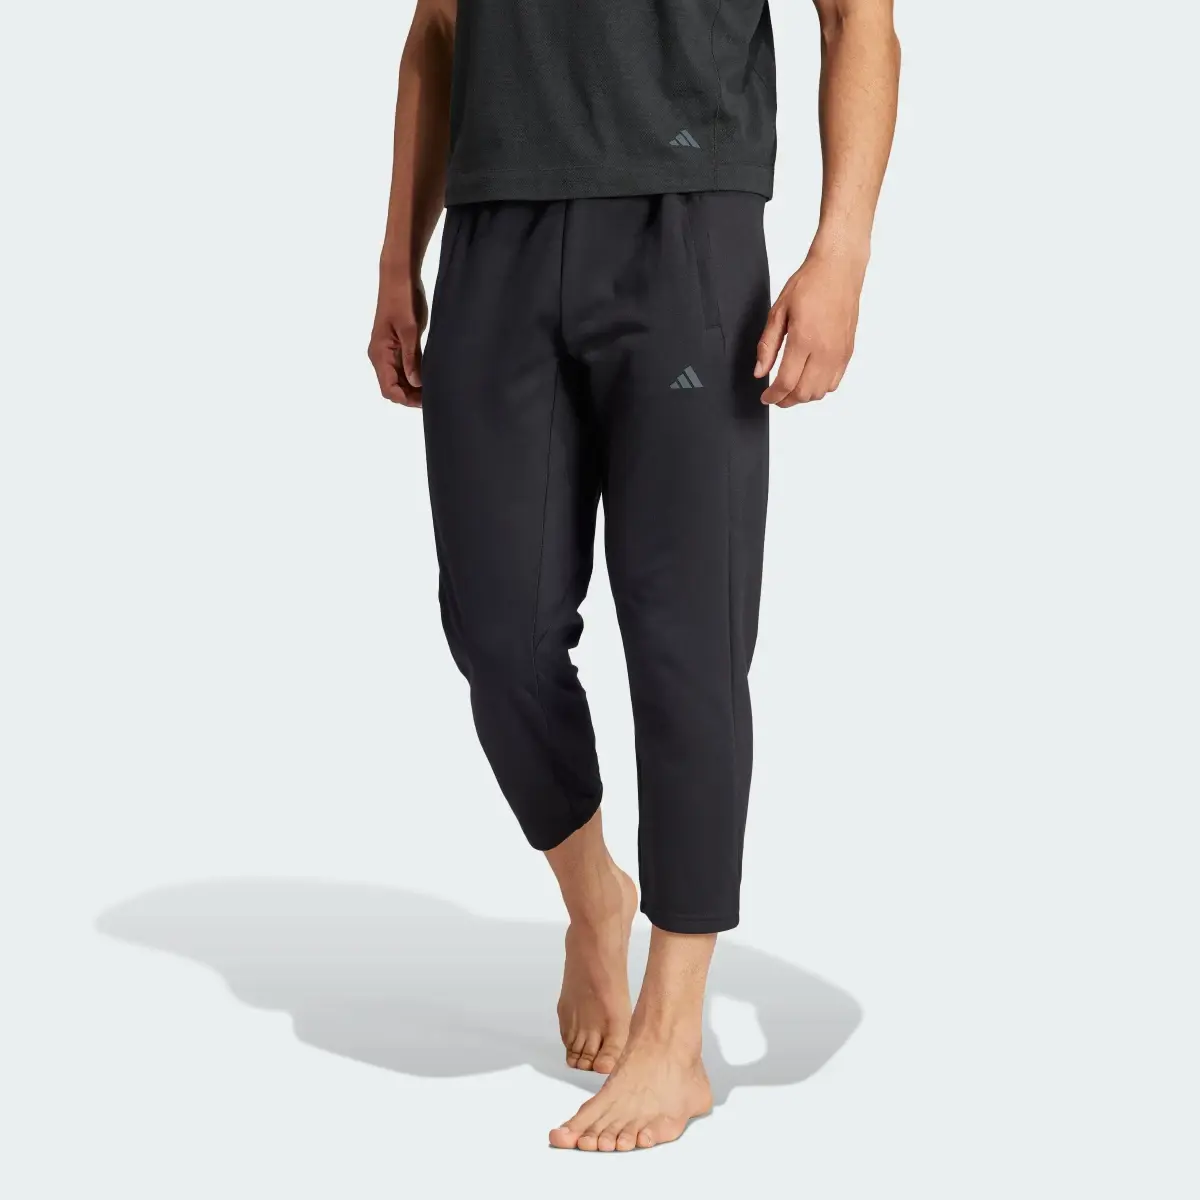 Adidas Yoga Training 7/8 Pants. 1